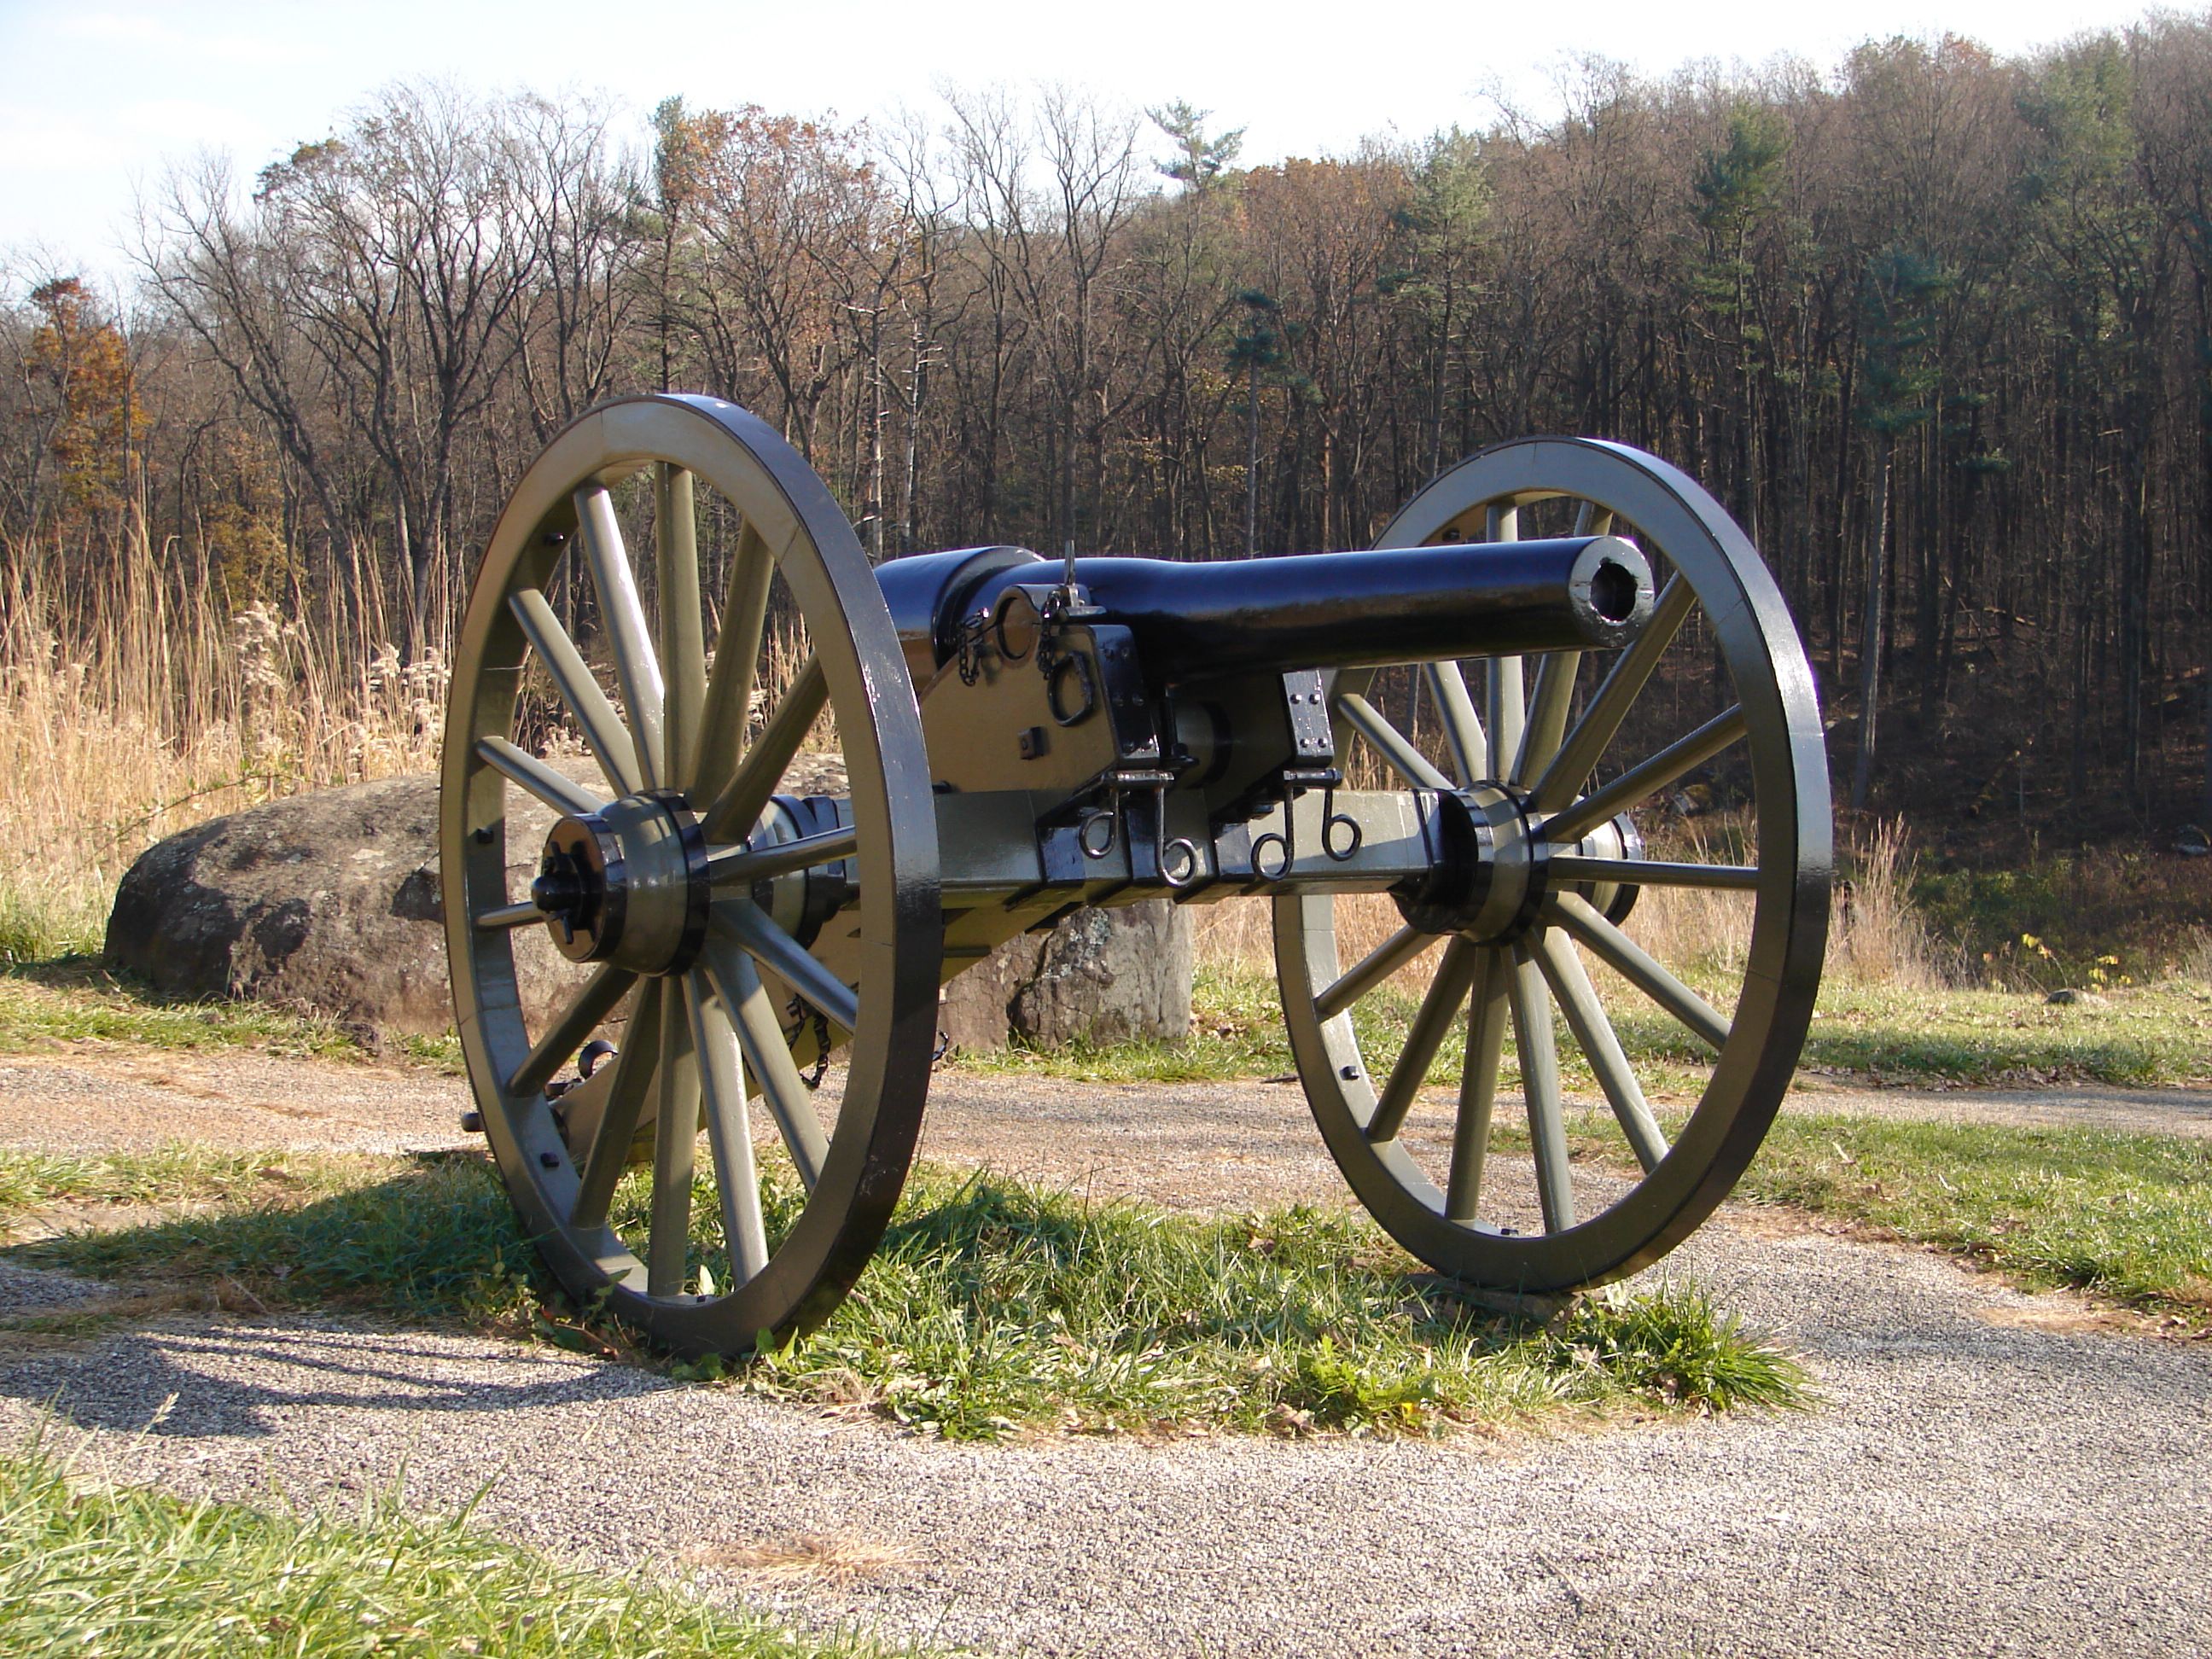 Cannon at Devil's Den in Gettysburg, PA | History | Pinterest ...